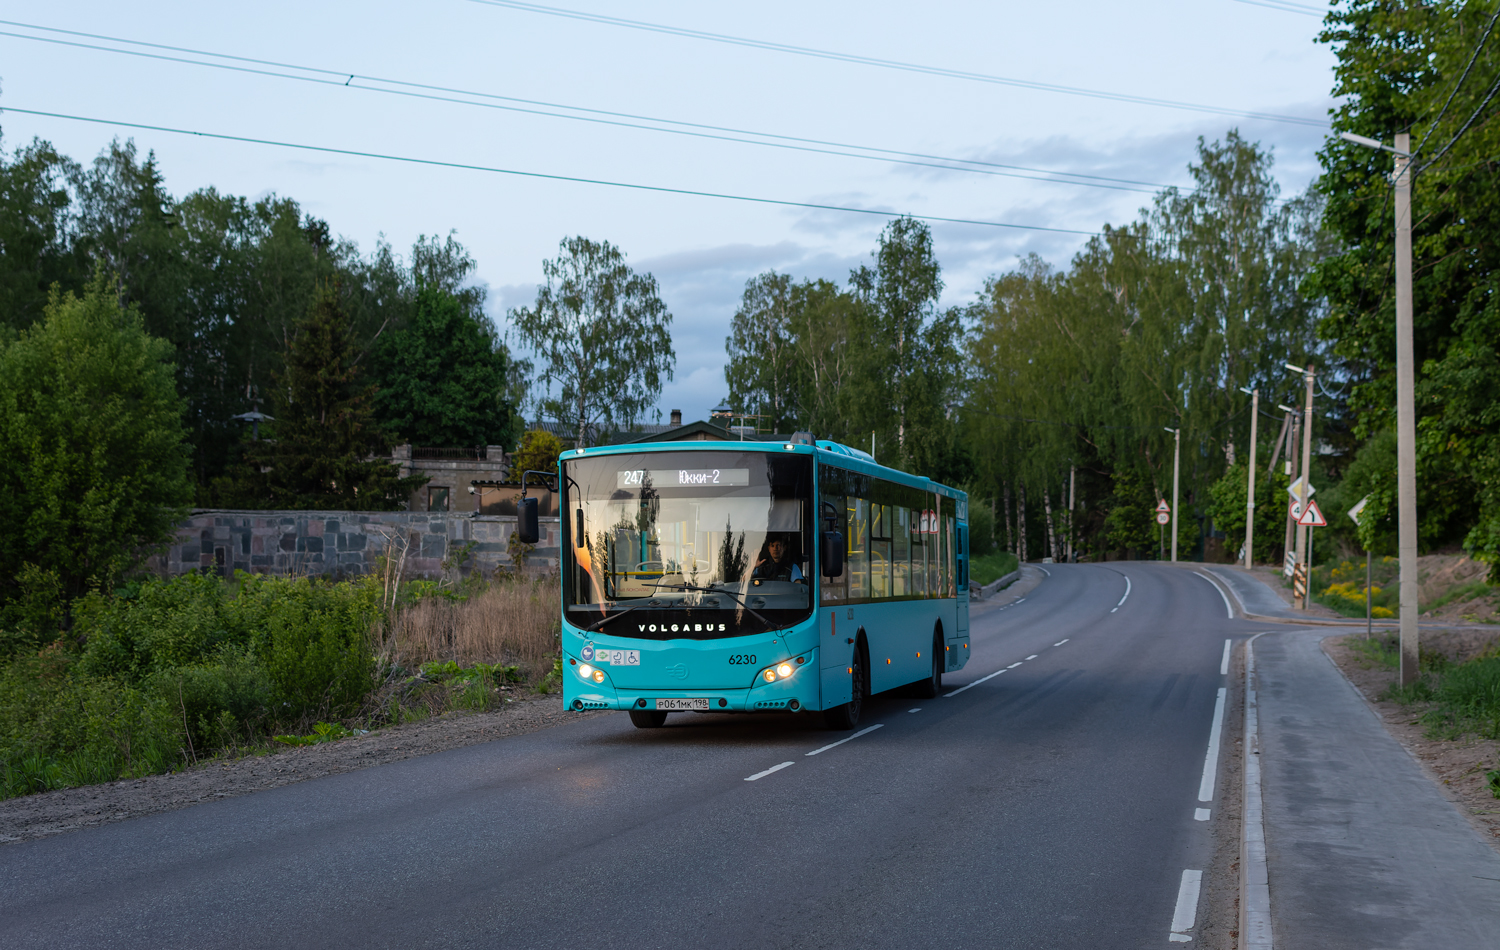 Petersburg, Volgabus-5270.G2 (LNG) # 6230